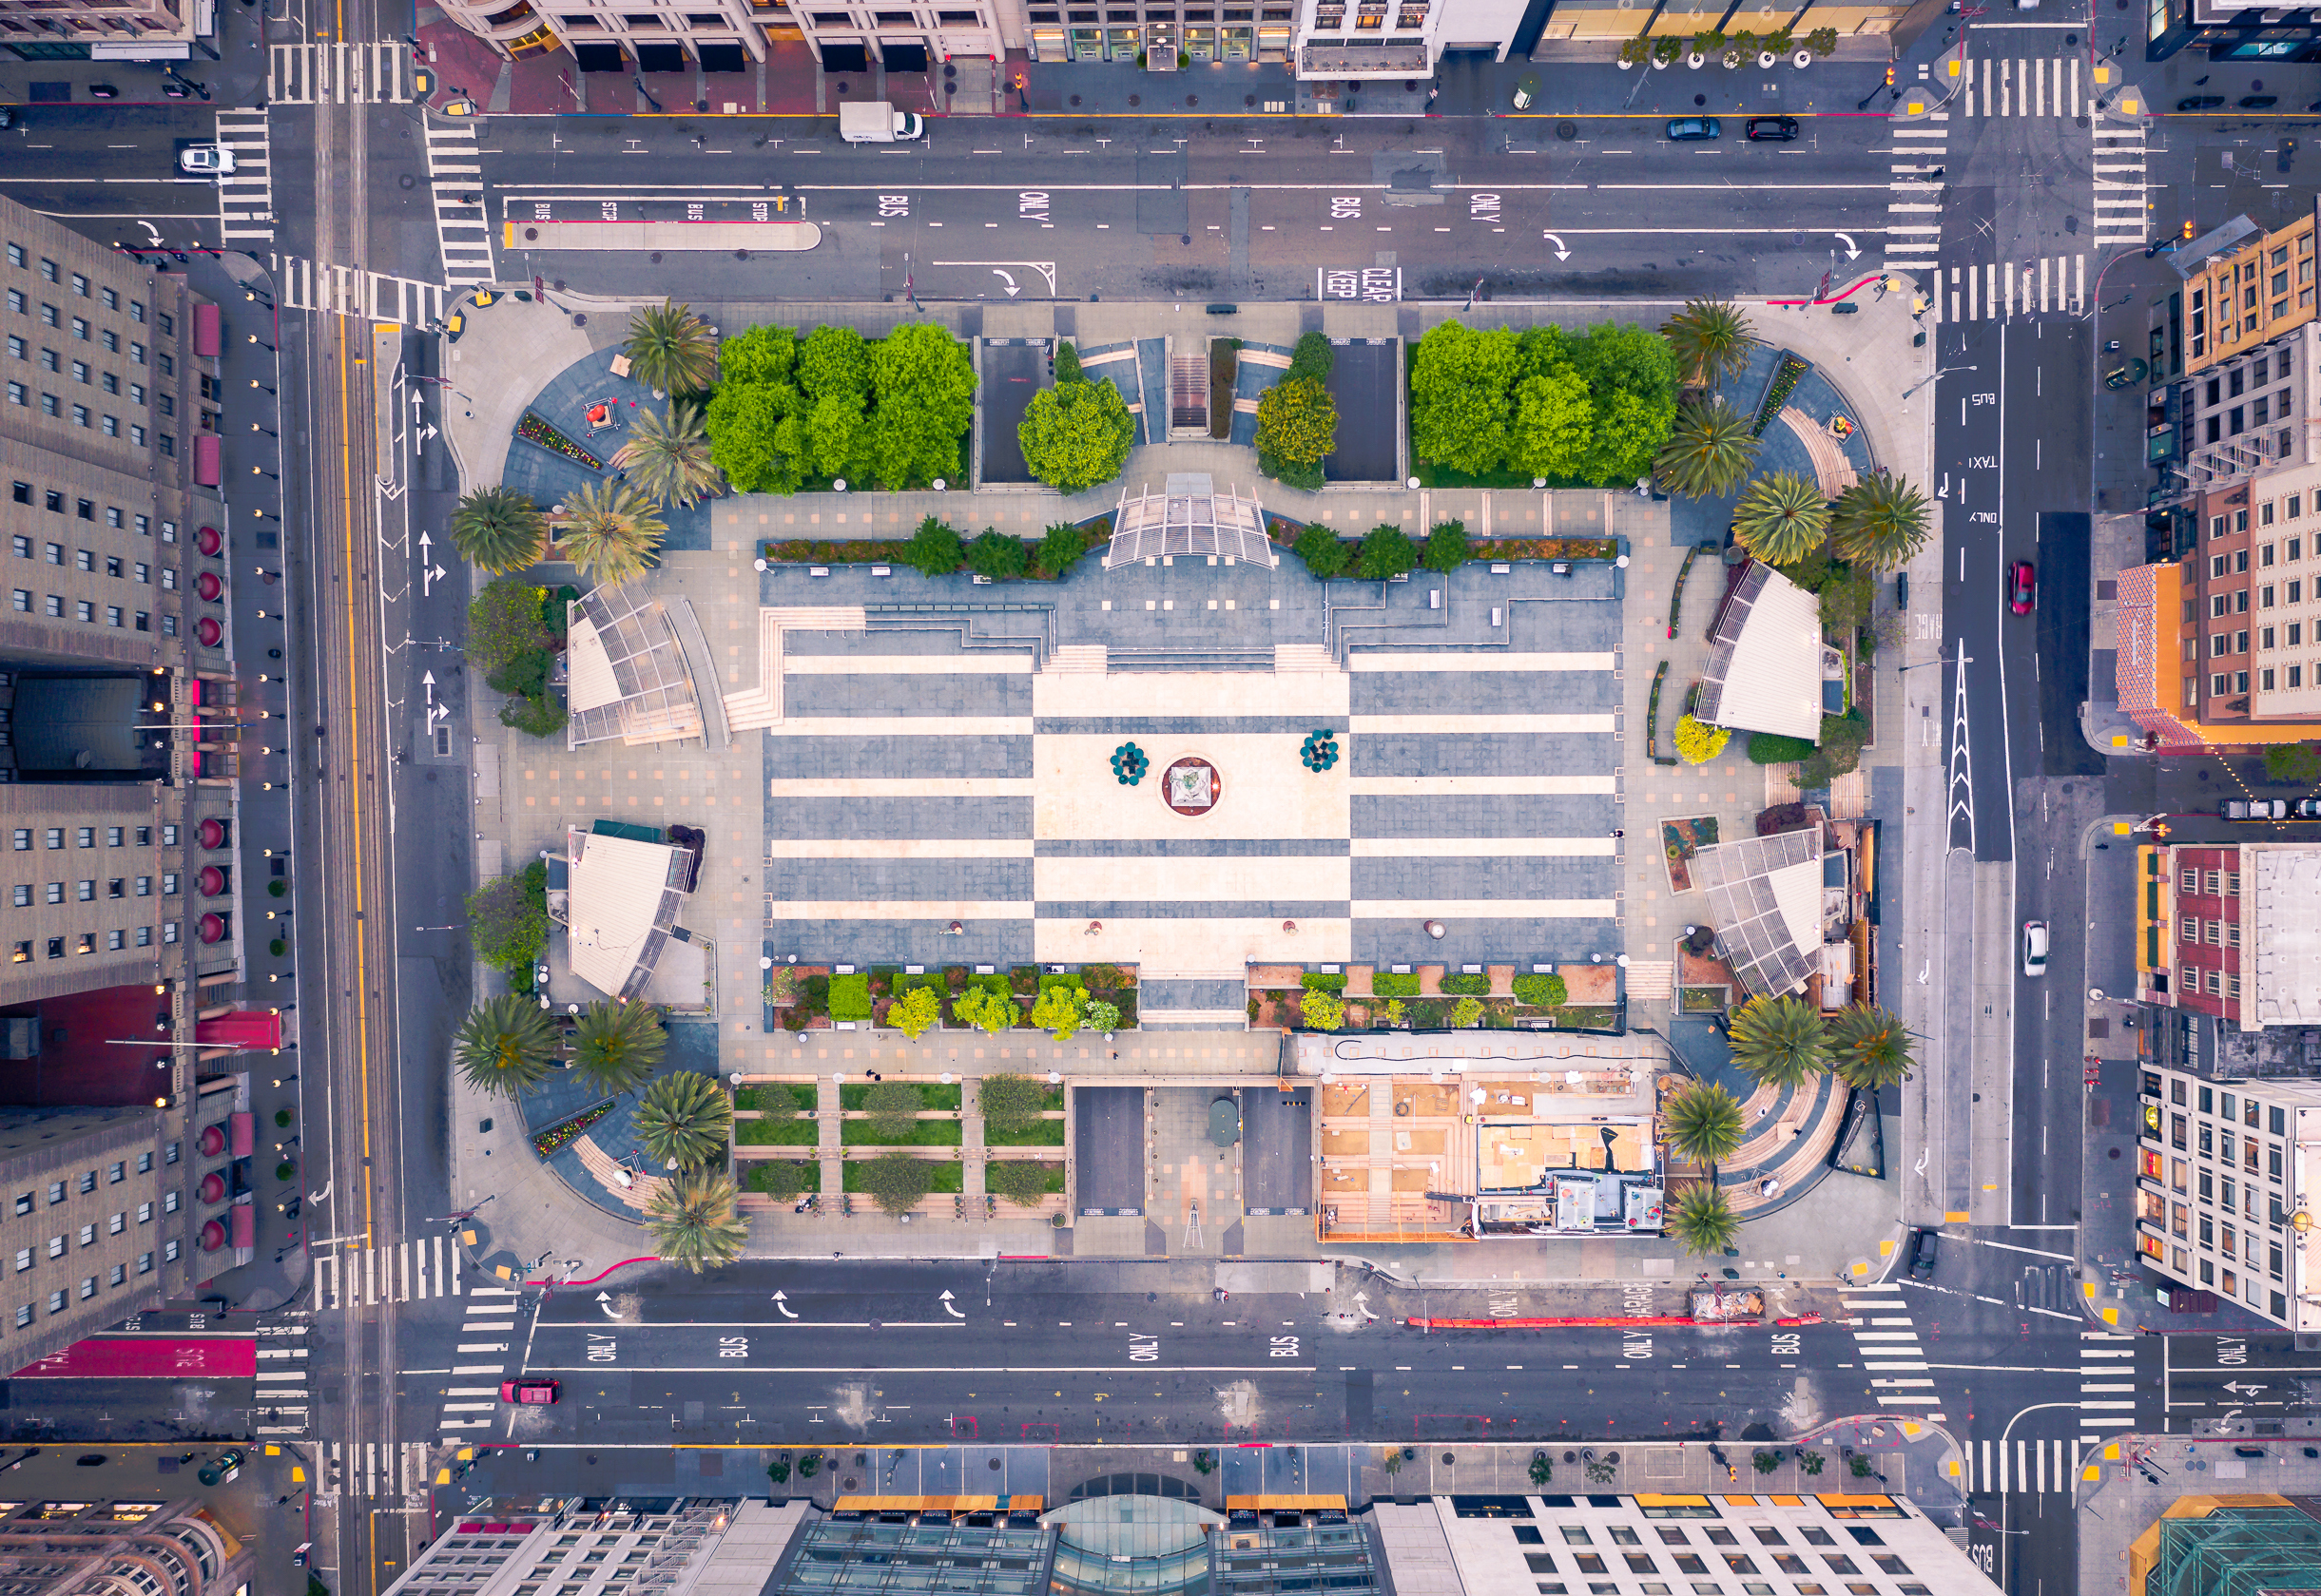 Can San Francisco Revive Struggling Union Square?